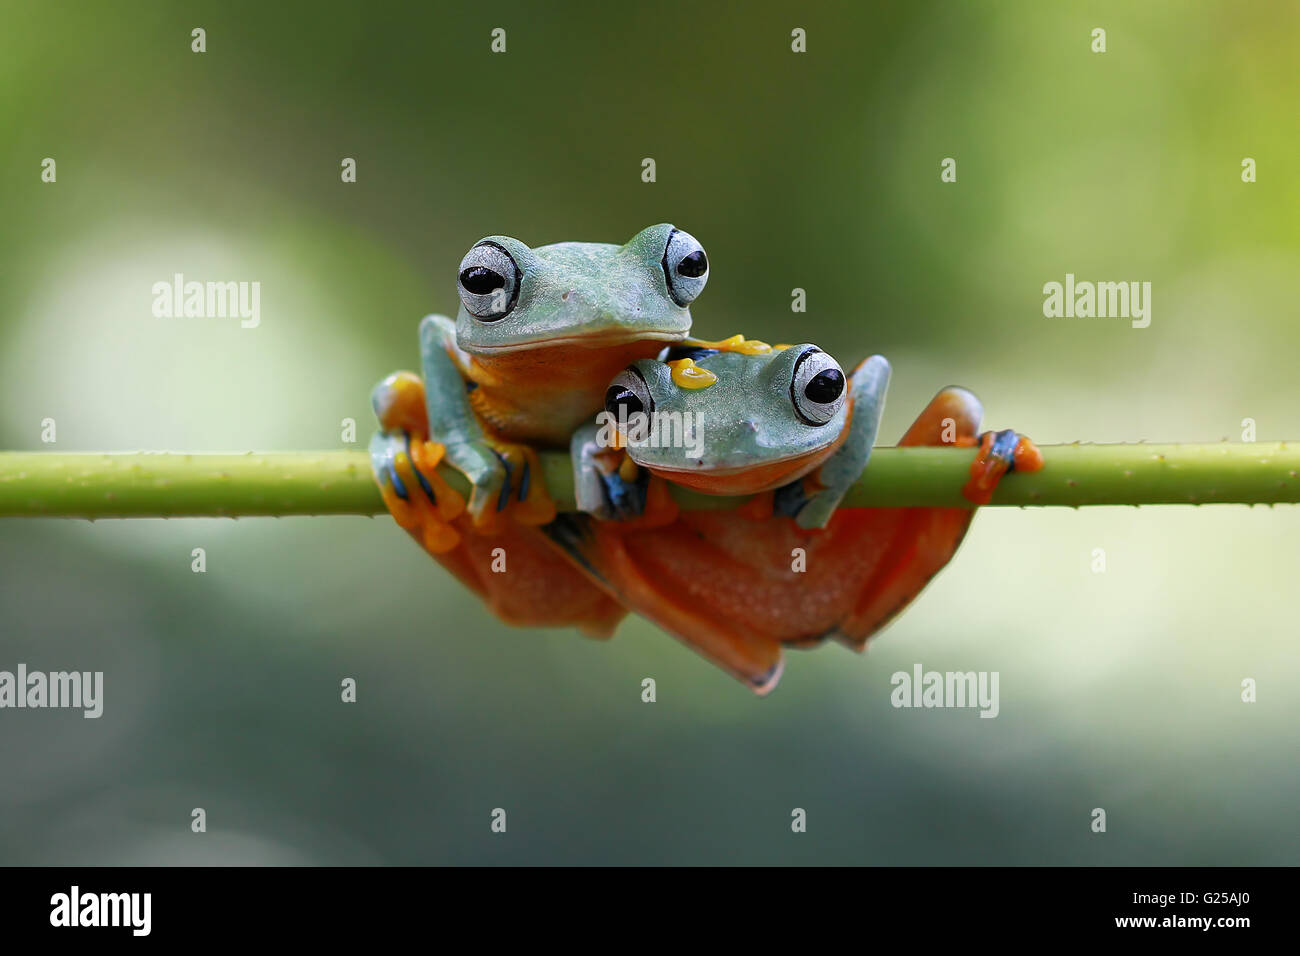 Two Tree frogs (rachophorus reinwardtii) sitting on branch, Indonesia Stock Photo